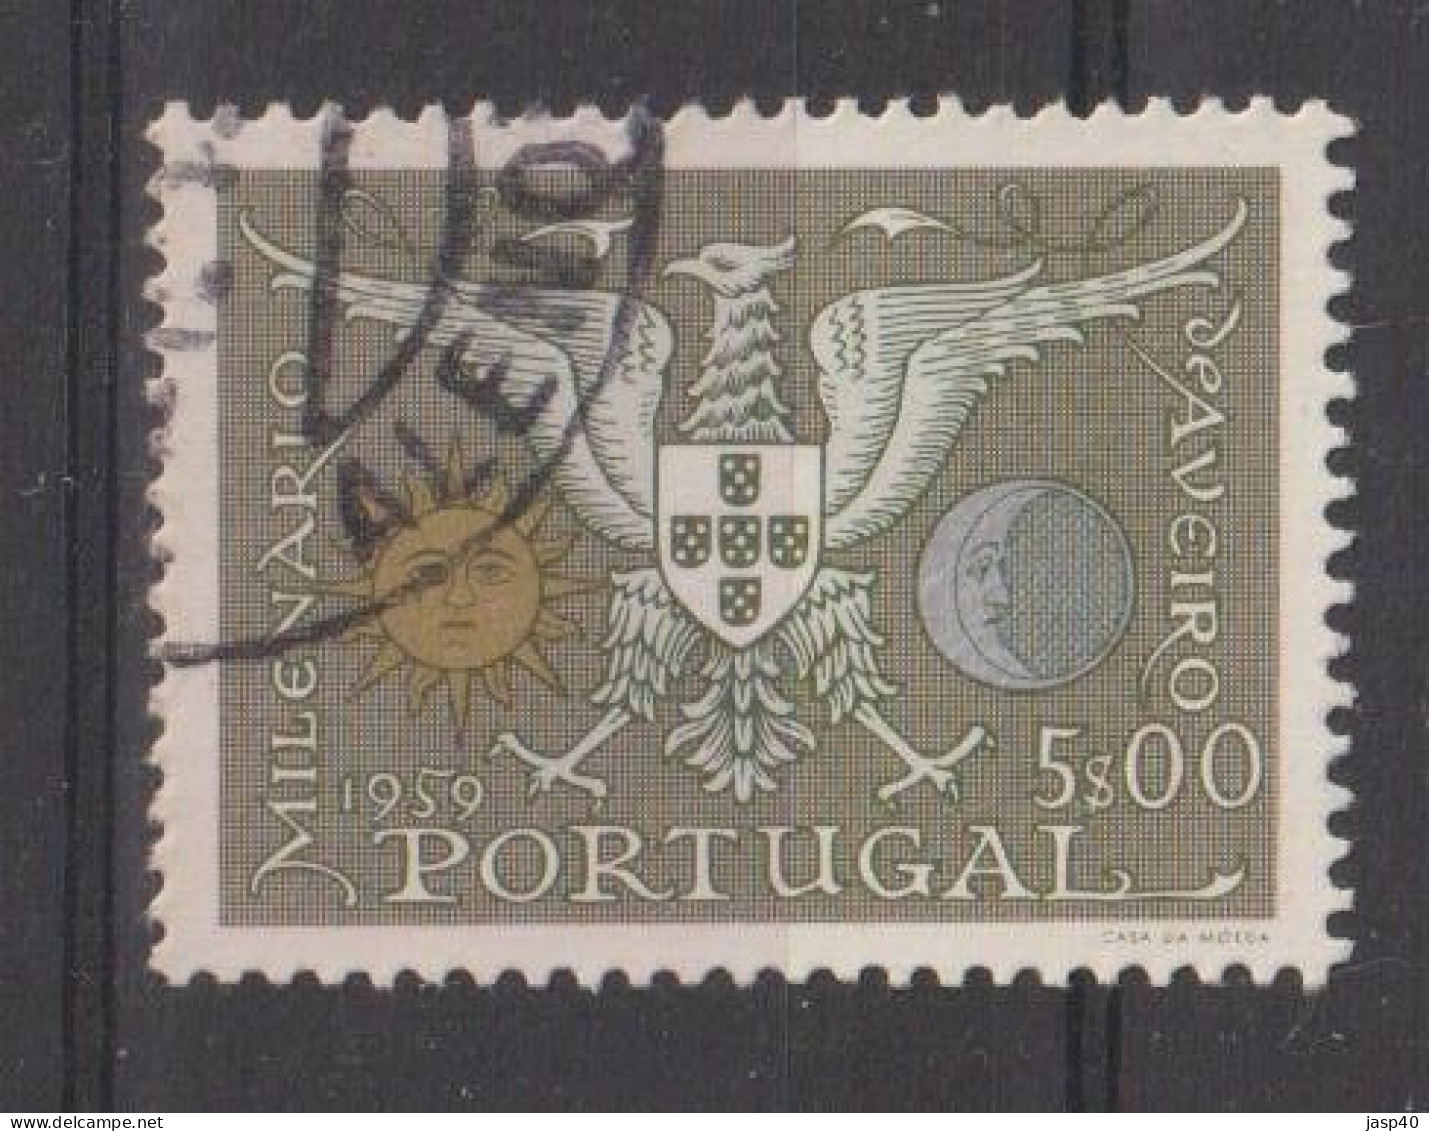 PORTUGAL 848 - POSTMARKS OF PORTUGAL - ALENQUER - Oblitérés